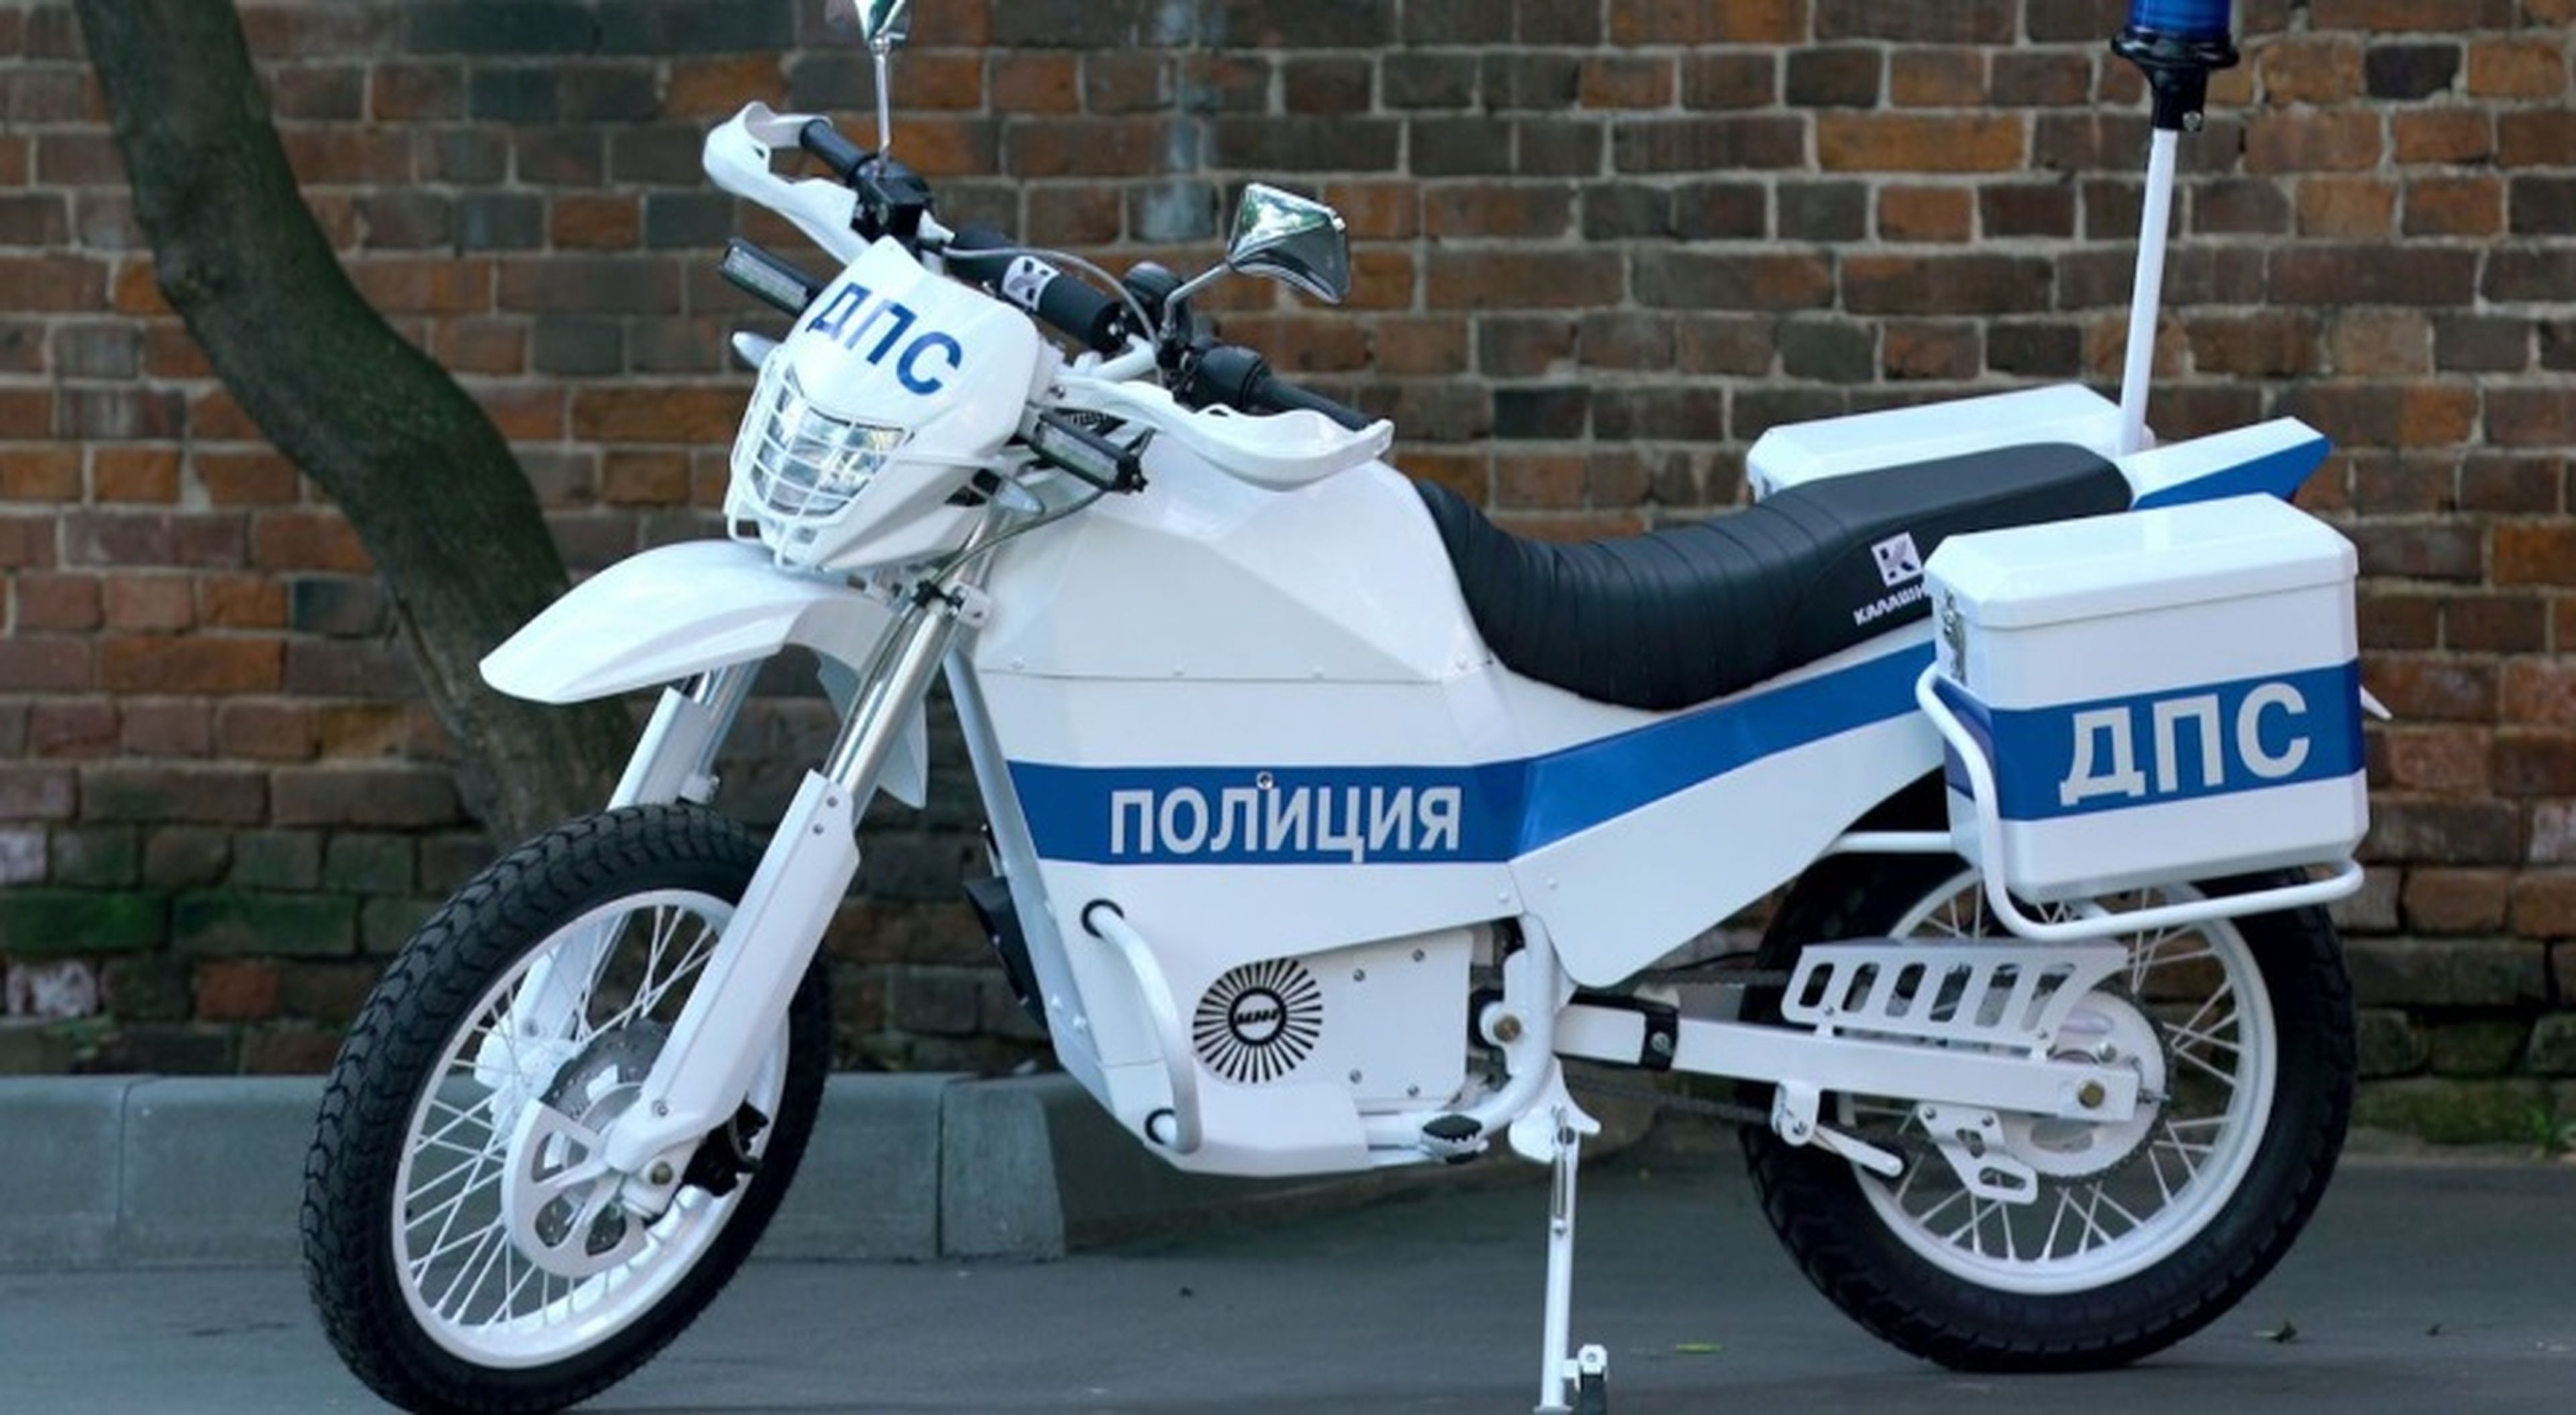 Moto eléctrica fabricada por Kalashnikov